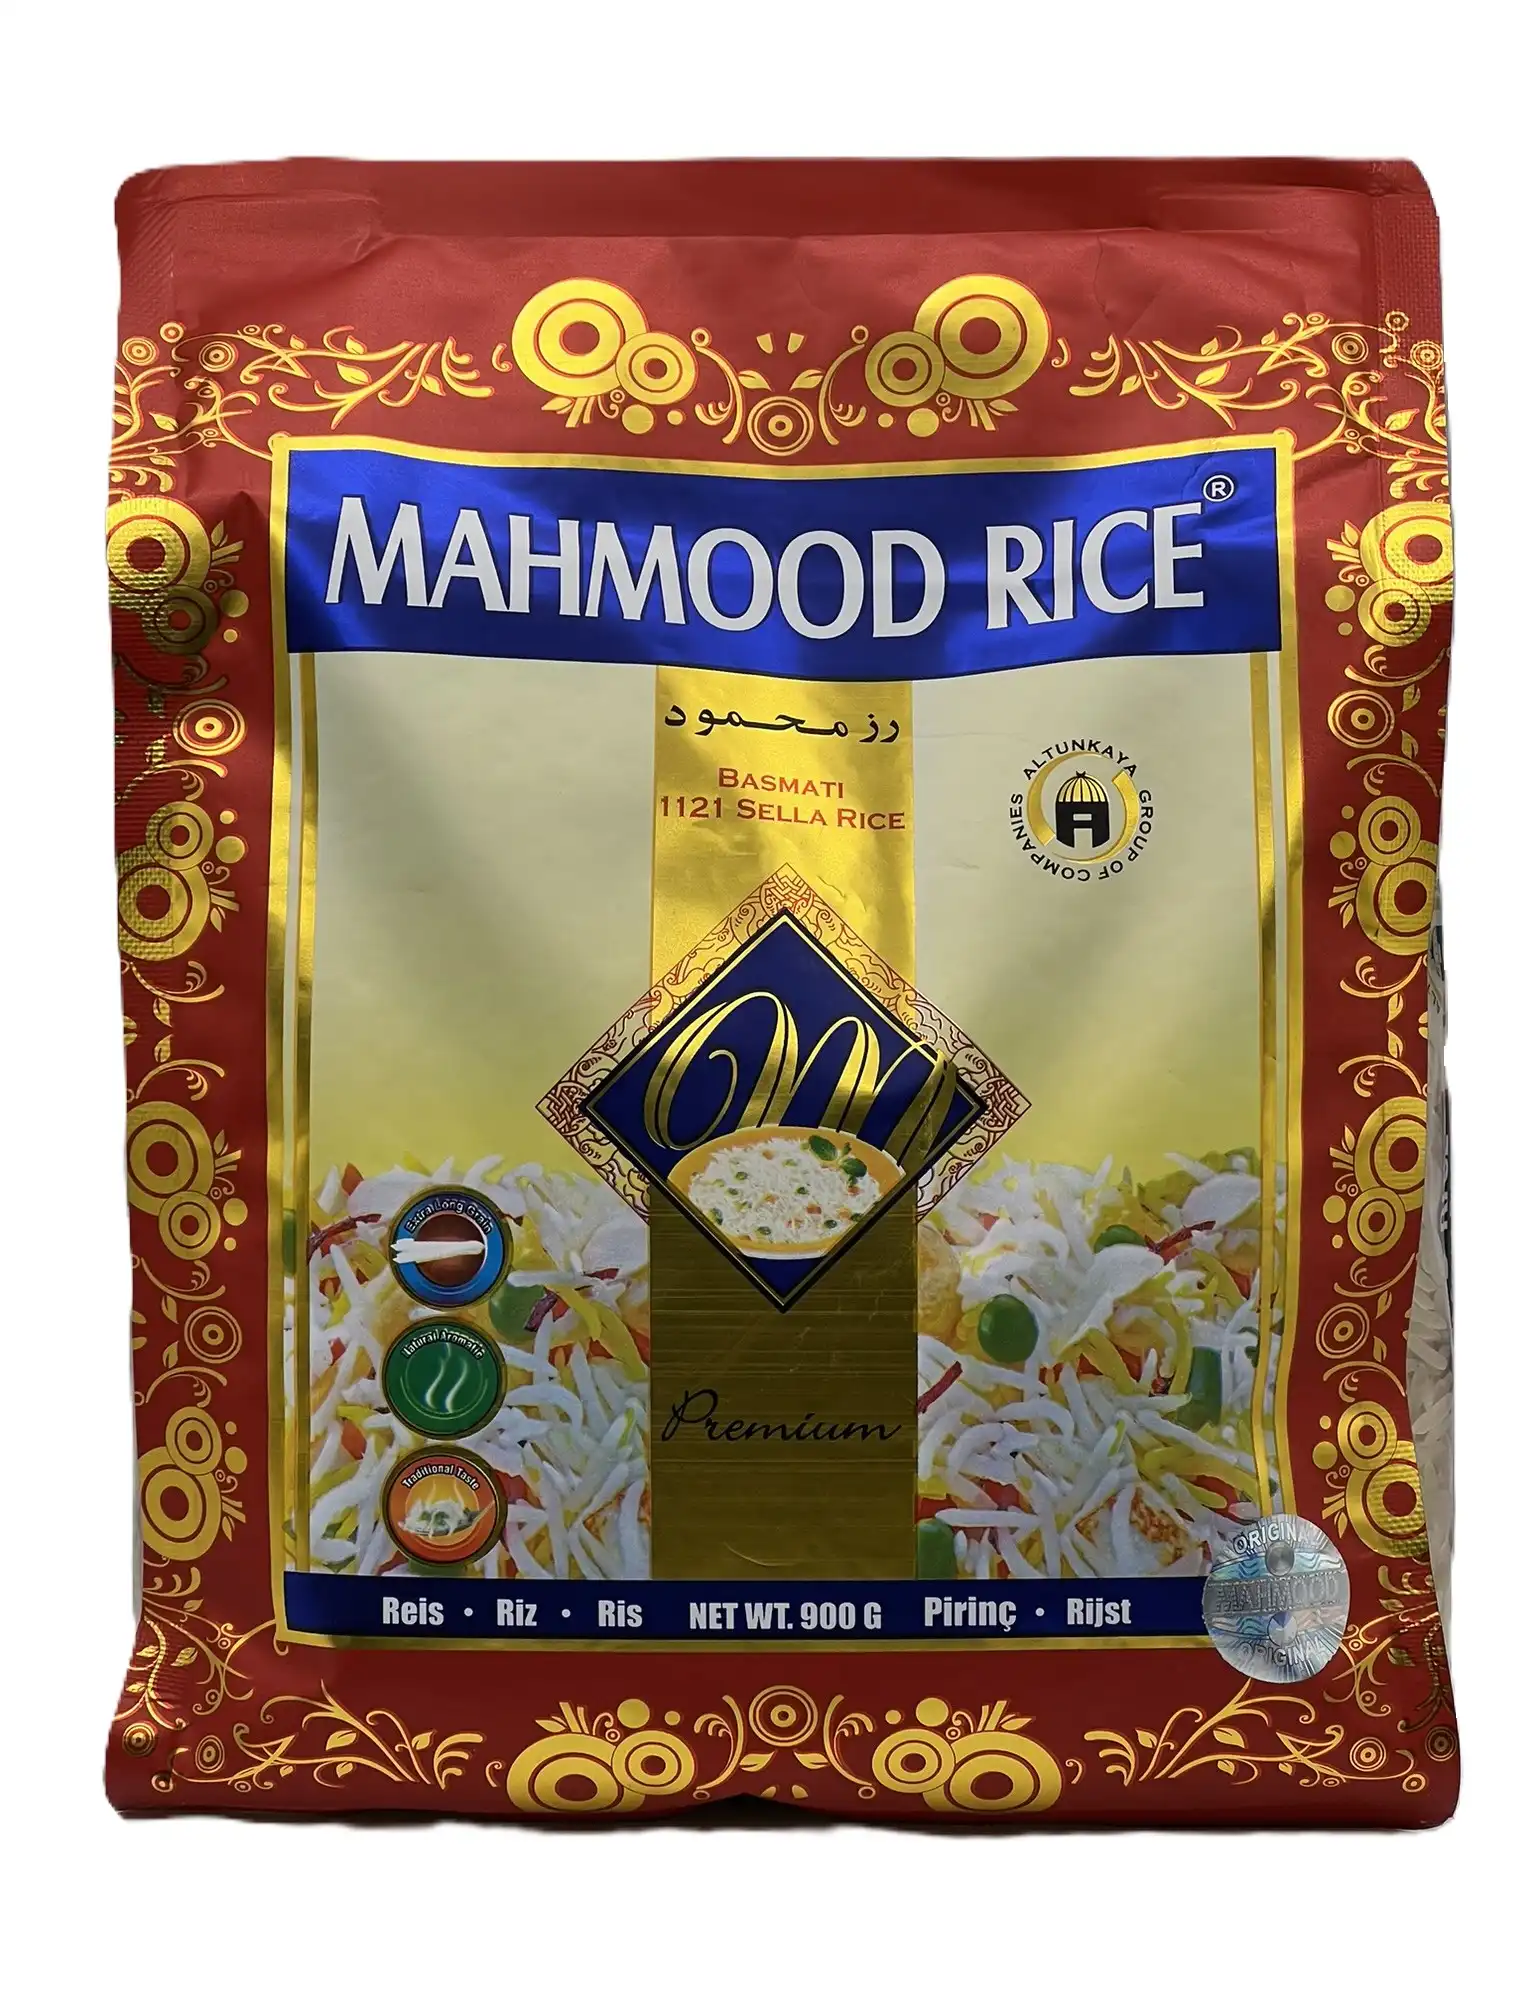 mahmood rice premium - basmati 1121 sella rice